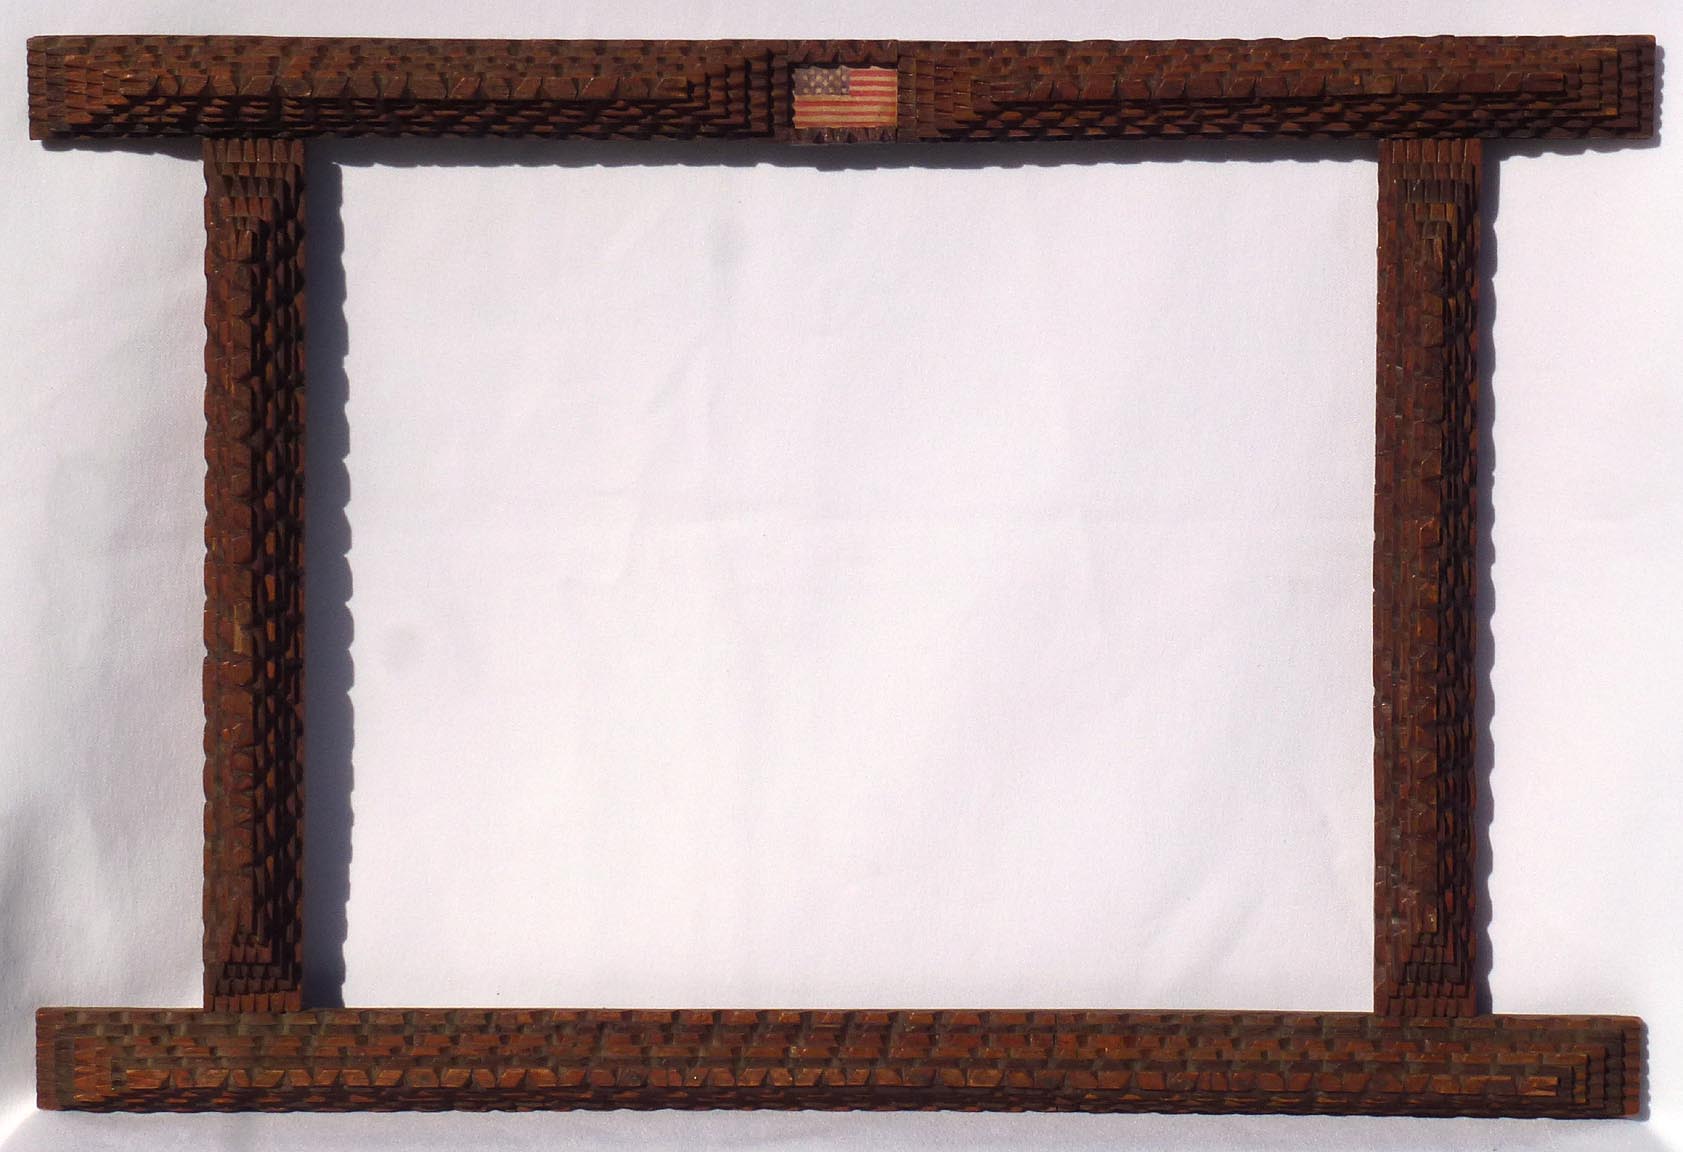 Tramp art frame with flag